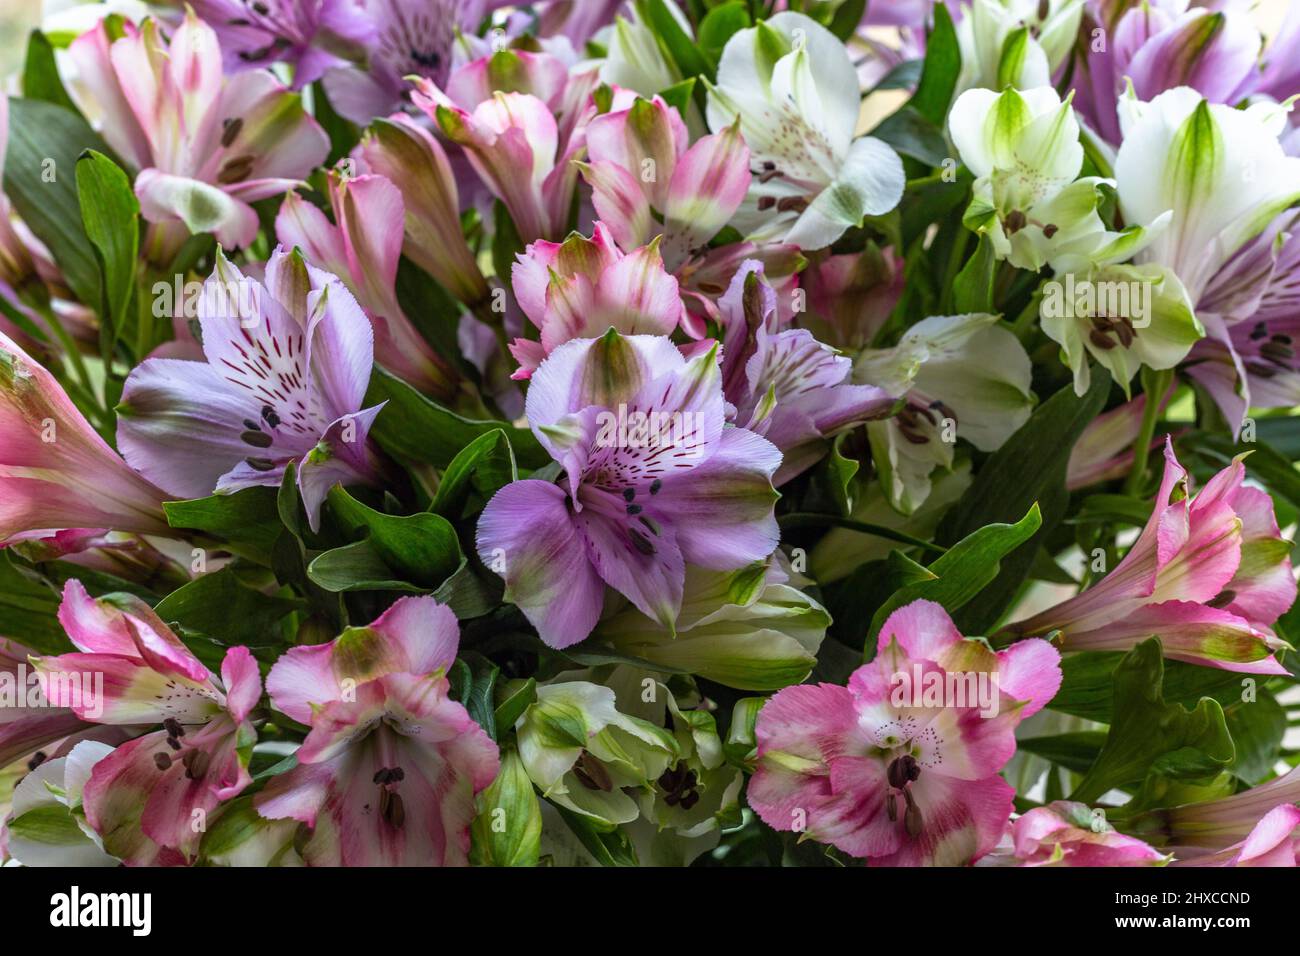 Alstroemeria flowers close-up. Stock Photo